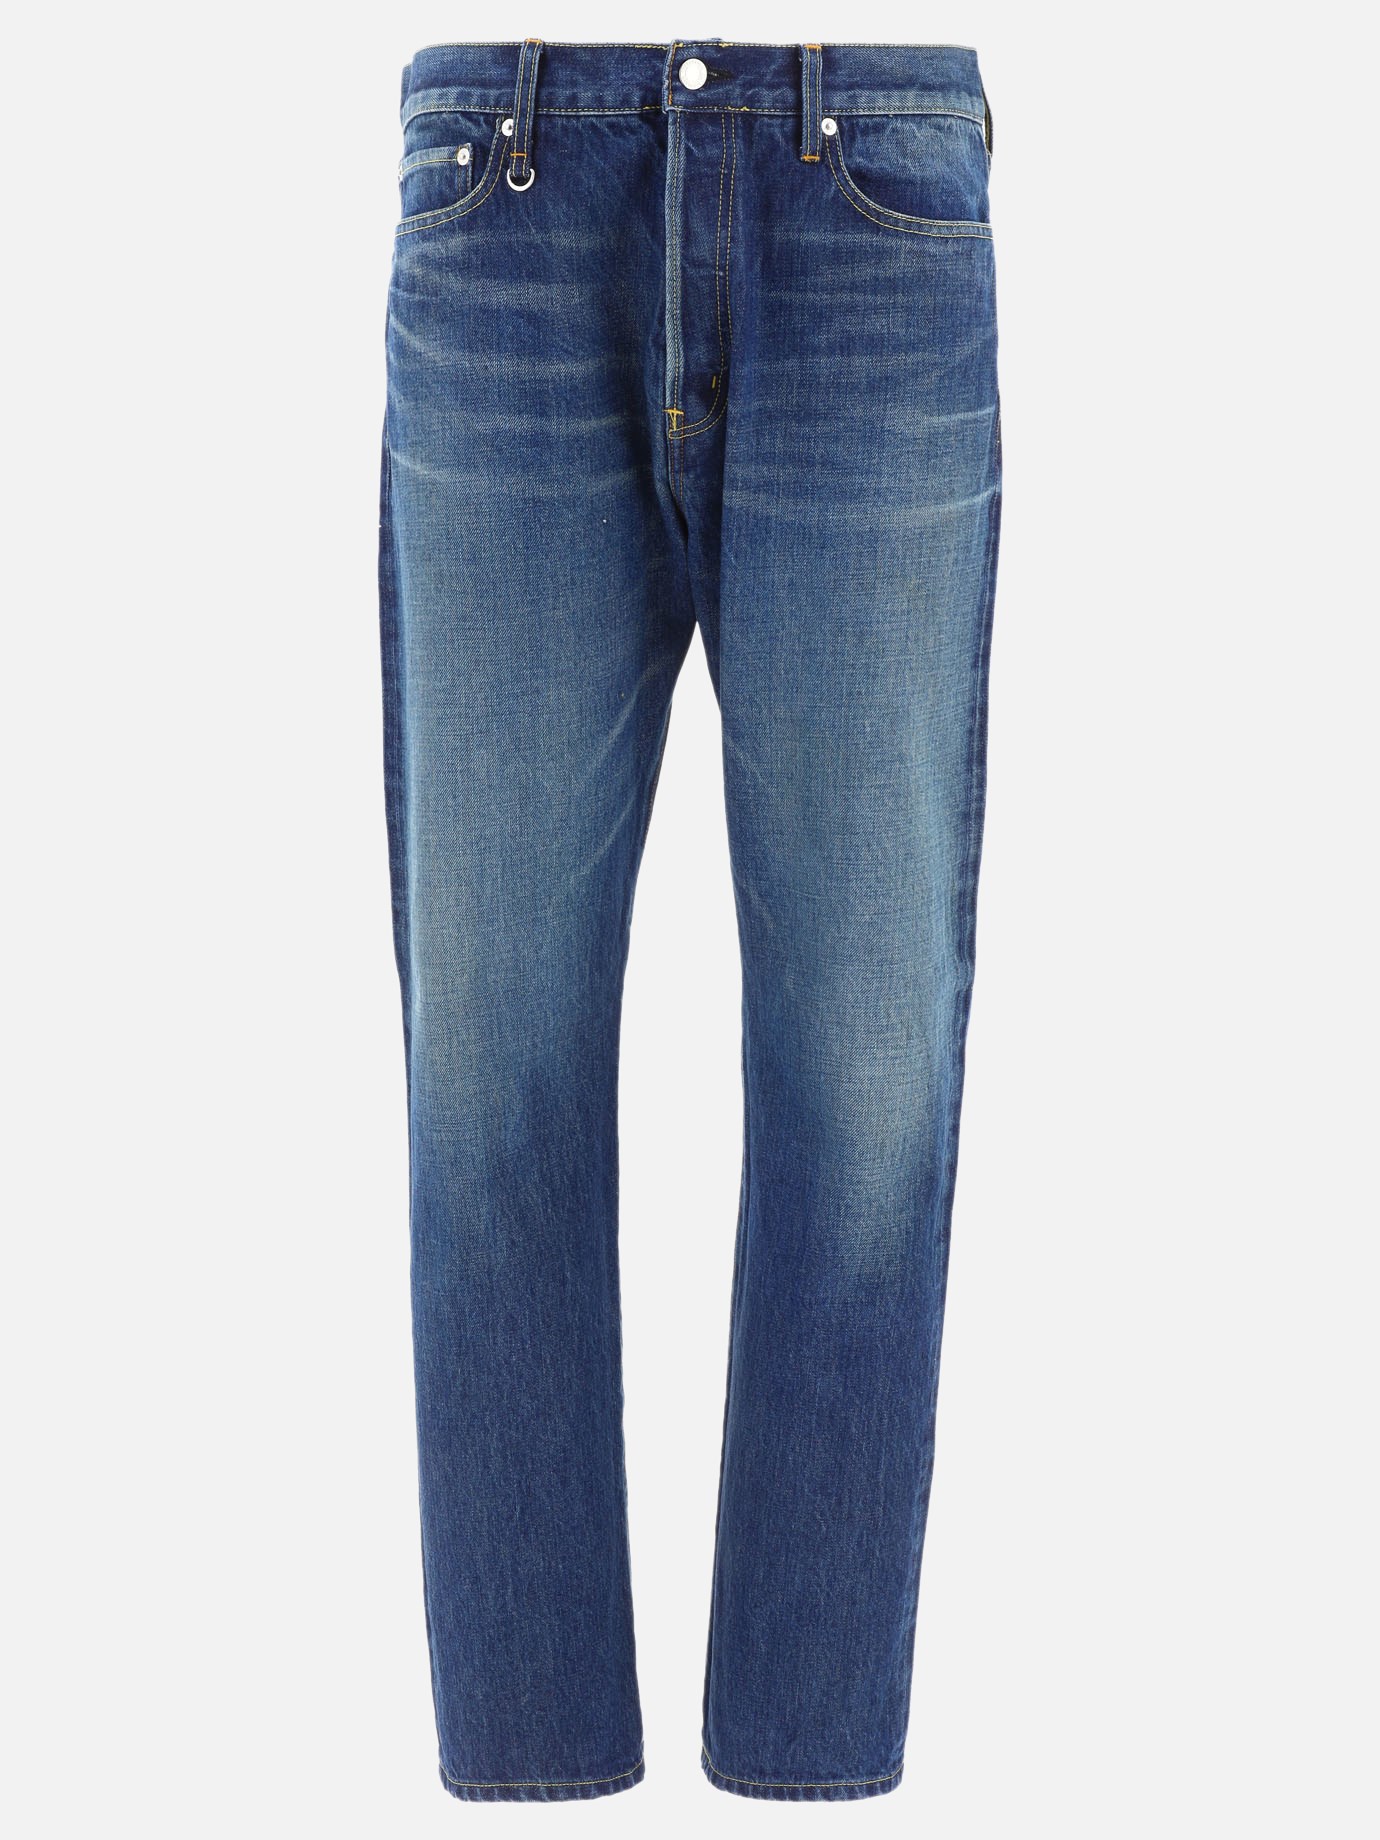 Jeans con zip posteriorieby Undercover - 1